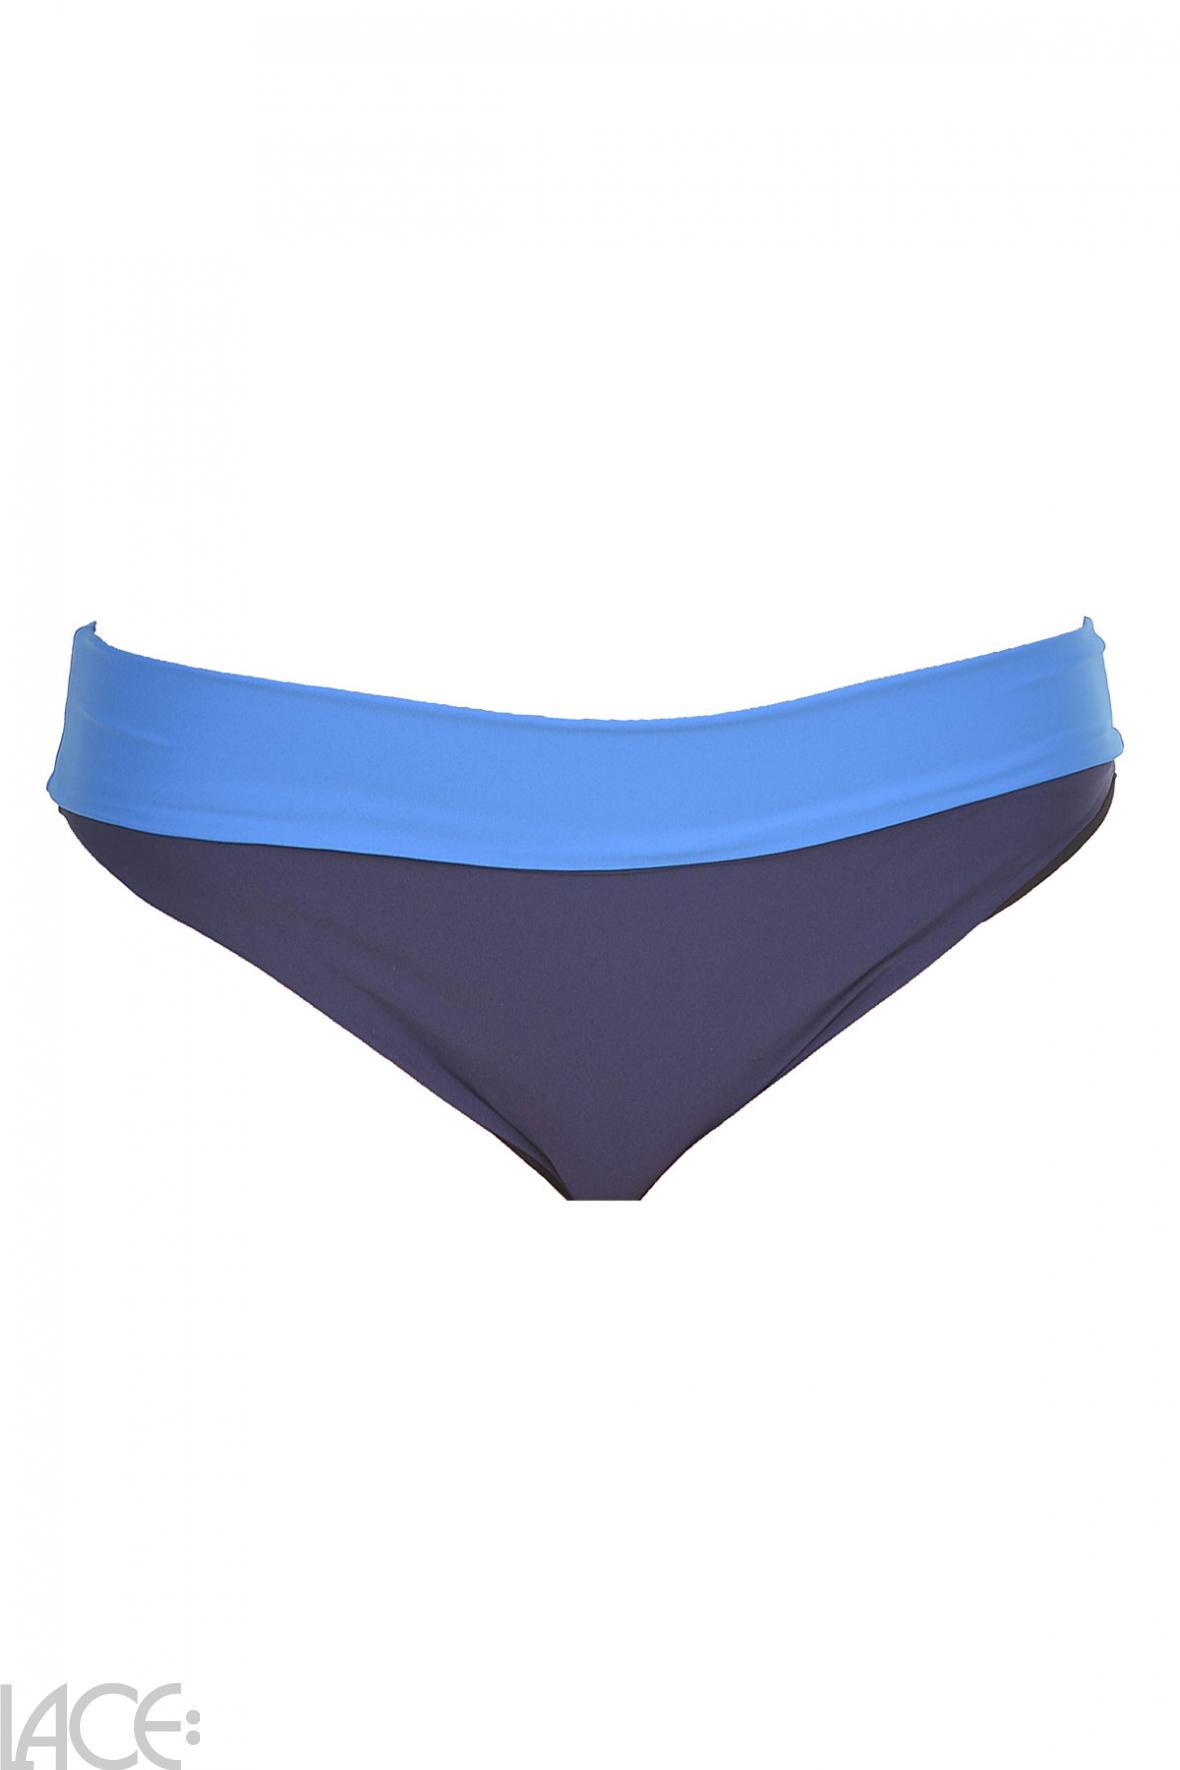 LACE LIngerie and Swim Solholm Bikini Folded brief NAVY – Lace-Lingerie.com